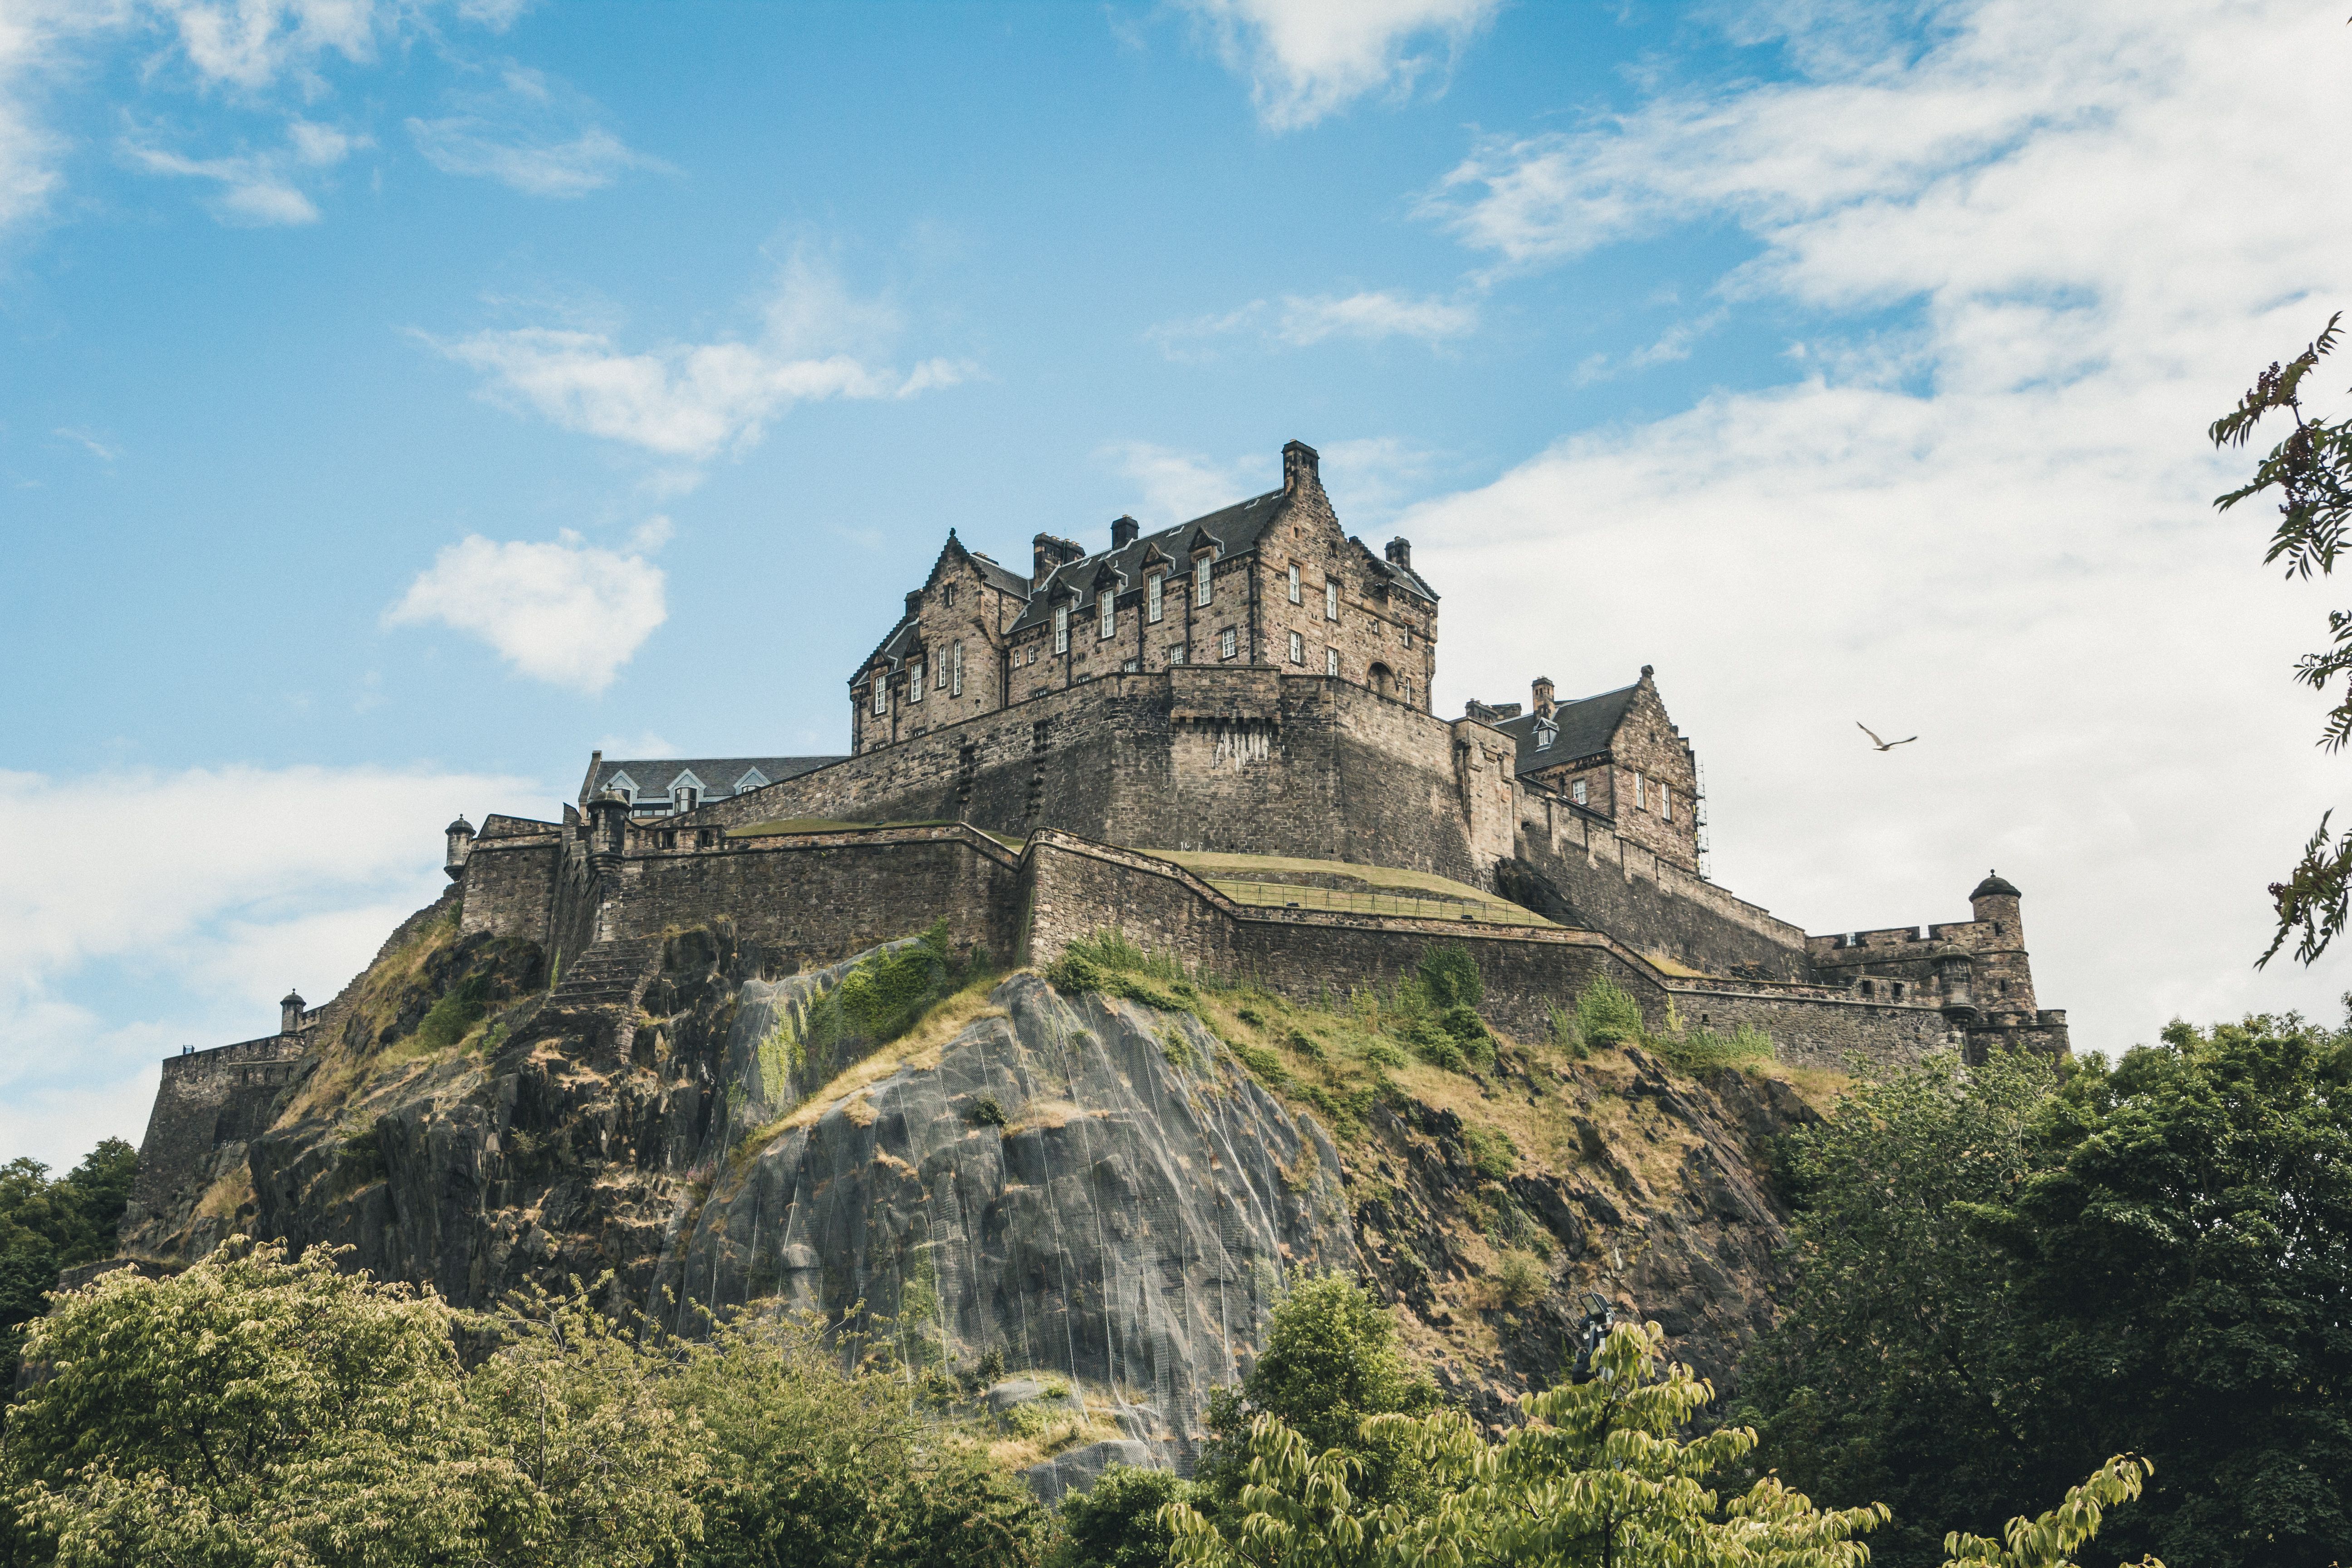 Edinburgh Castle Picture. Download Free Image